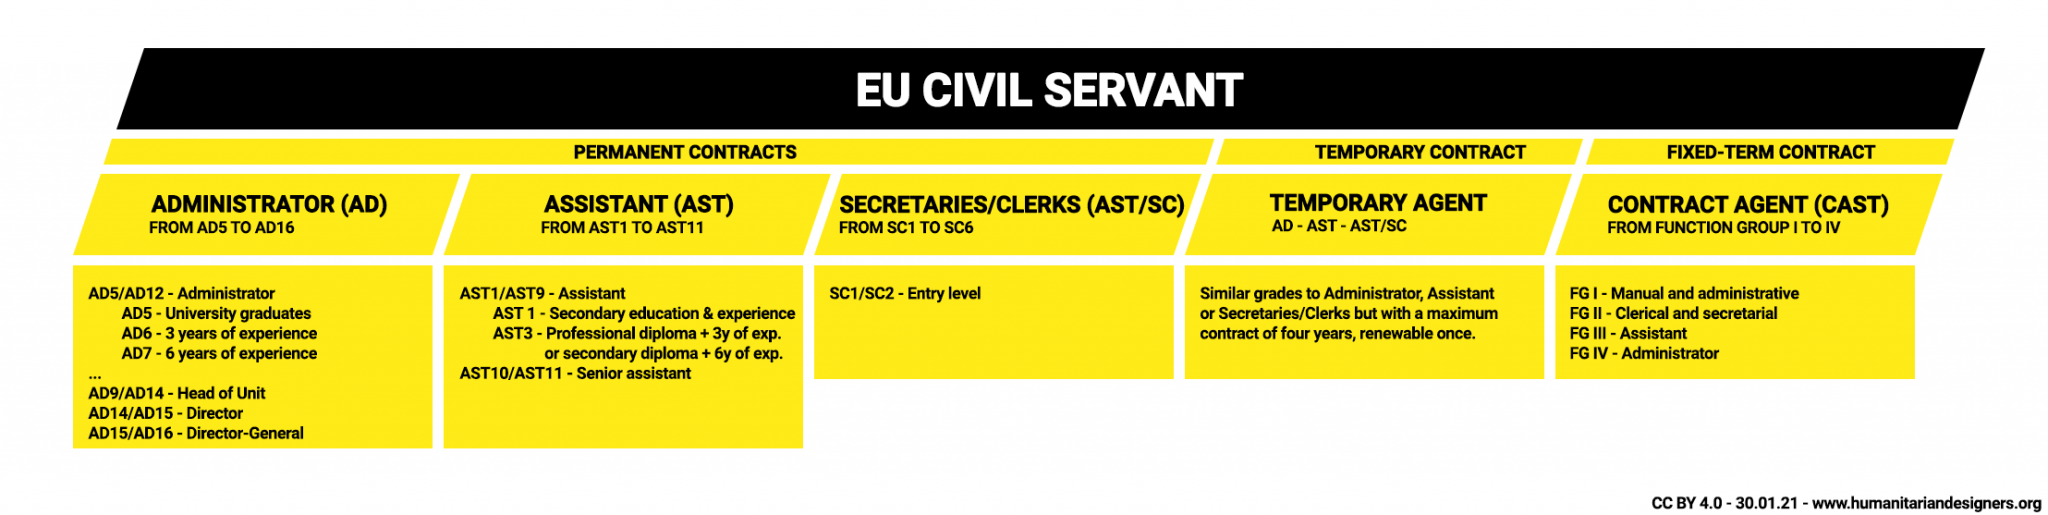 EU Civil servant - European Union EPSO